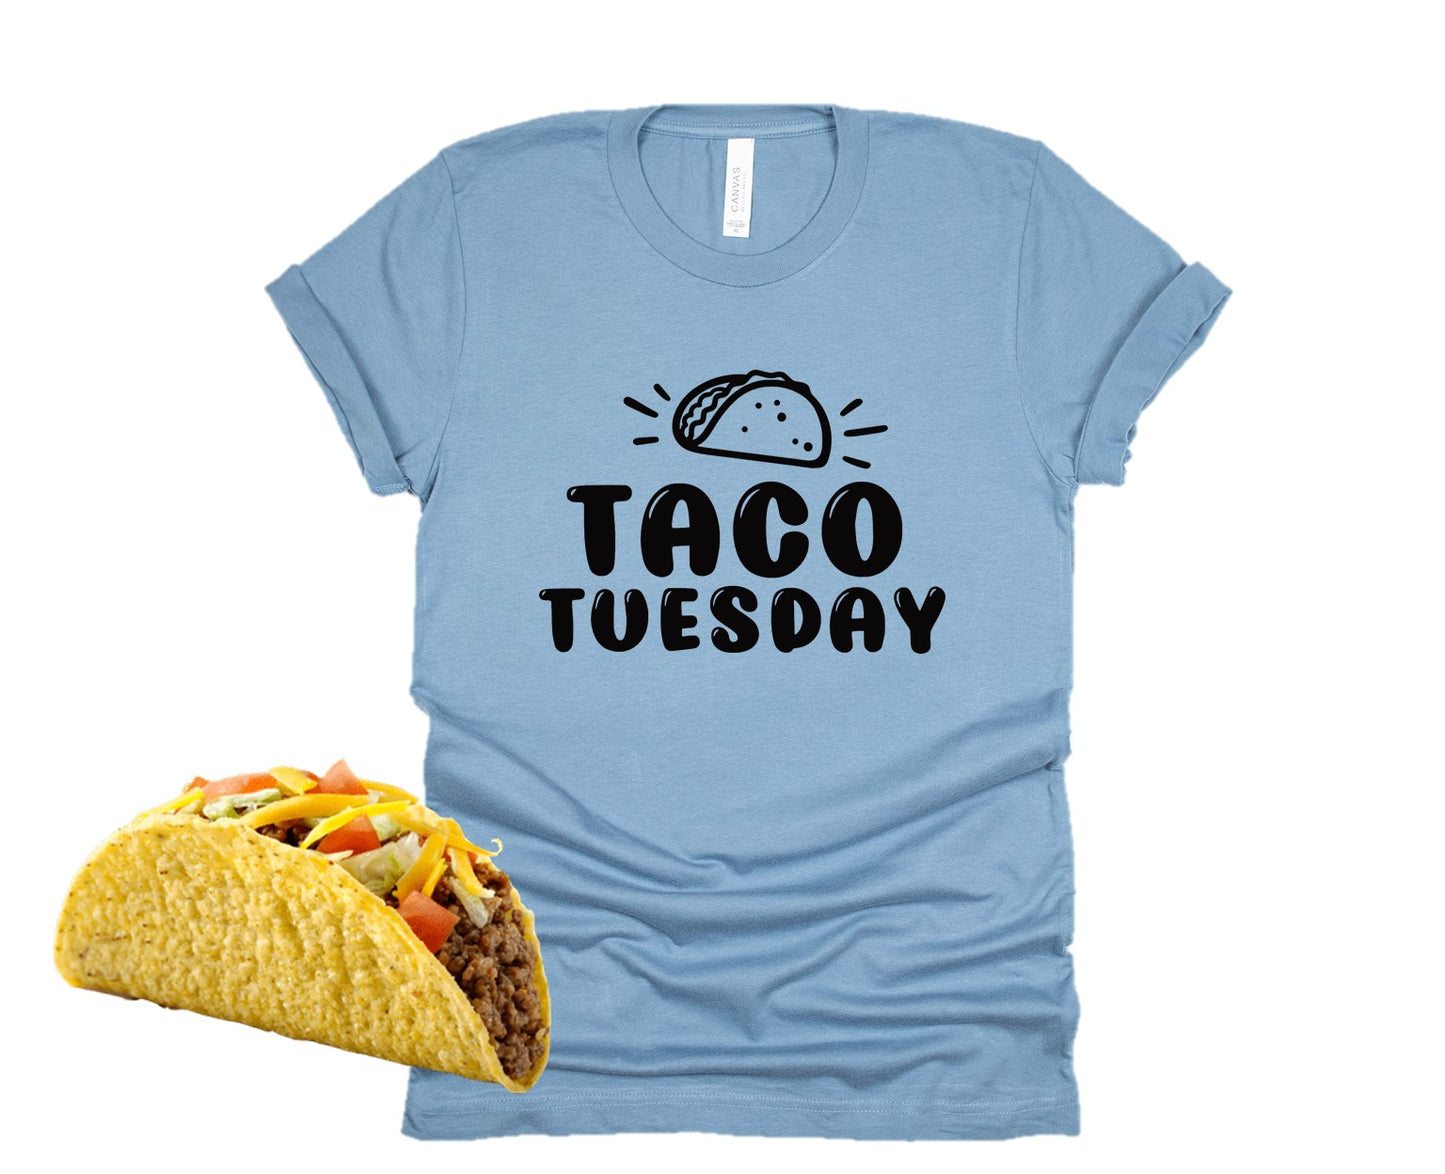 Taco Tuesday Tee